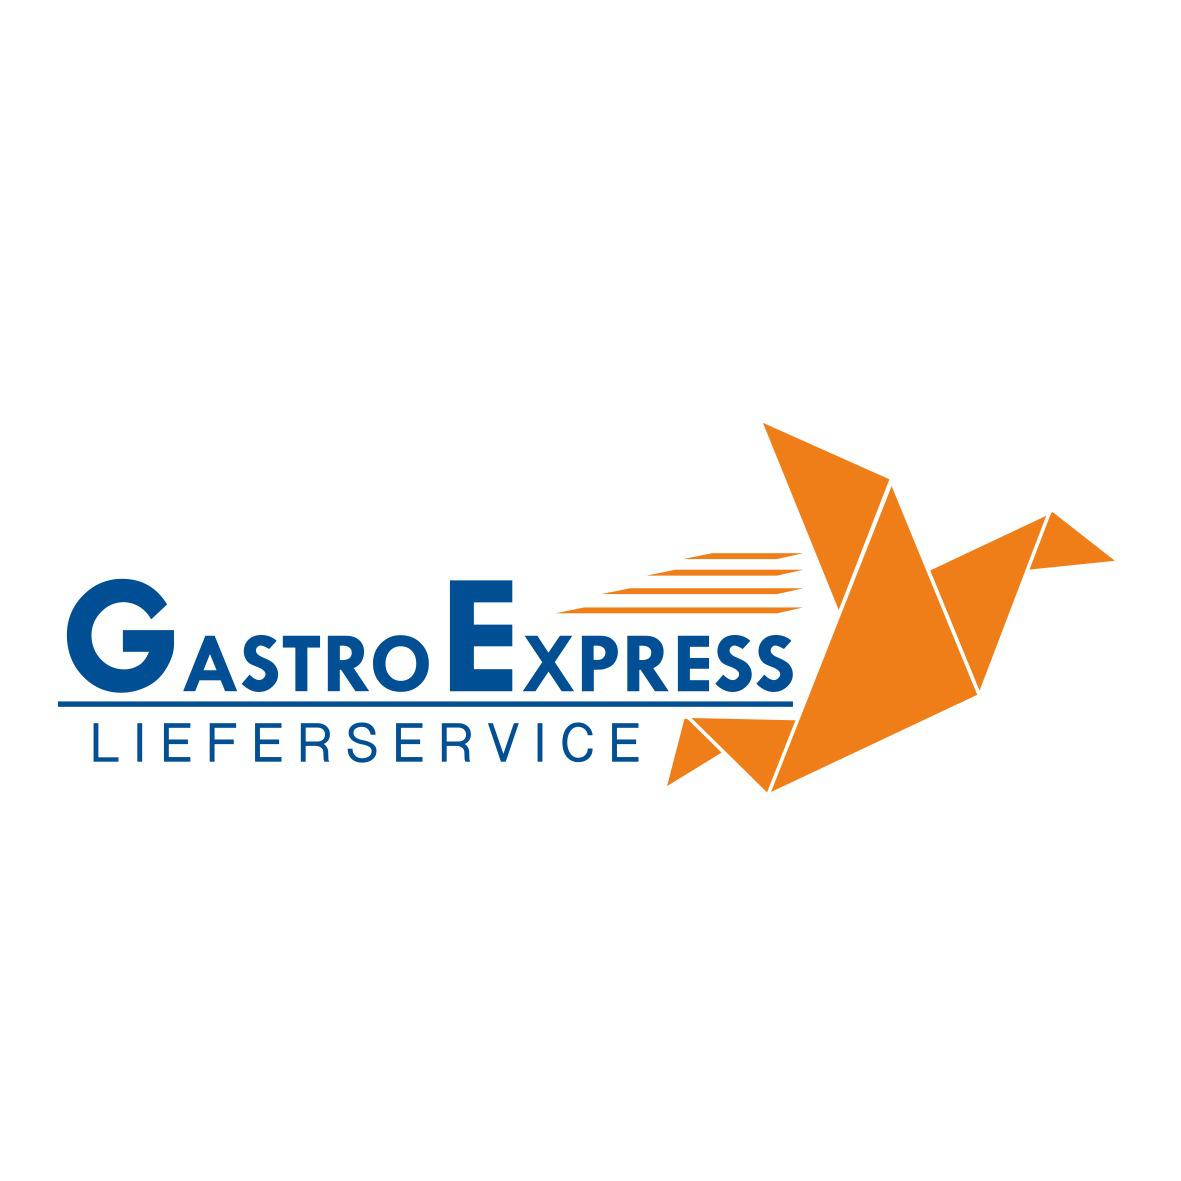 Gastro Express Lieferservice Inh. Zeynep Caglayan in Bremen - Logo